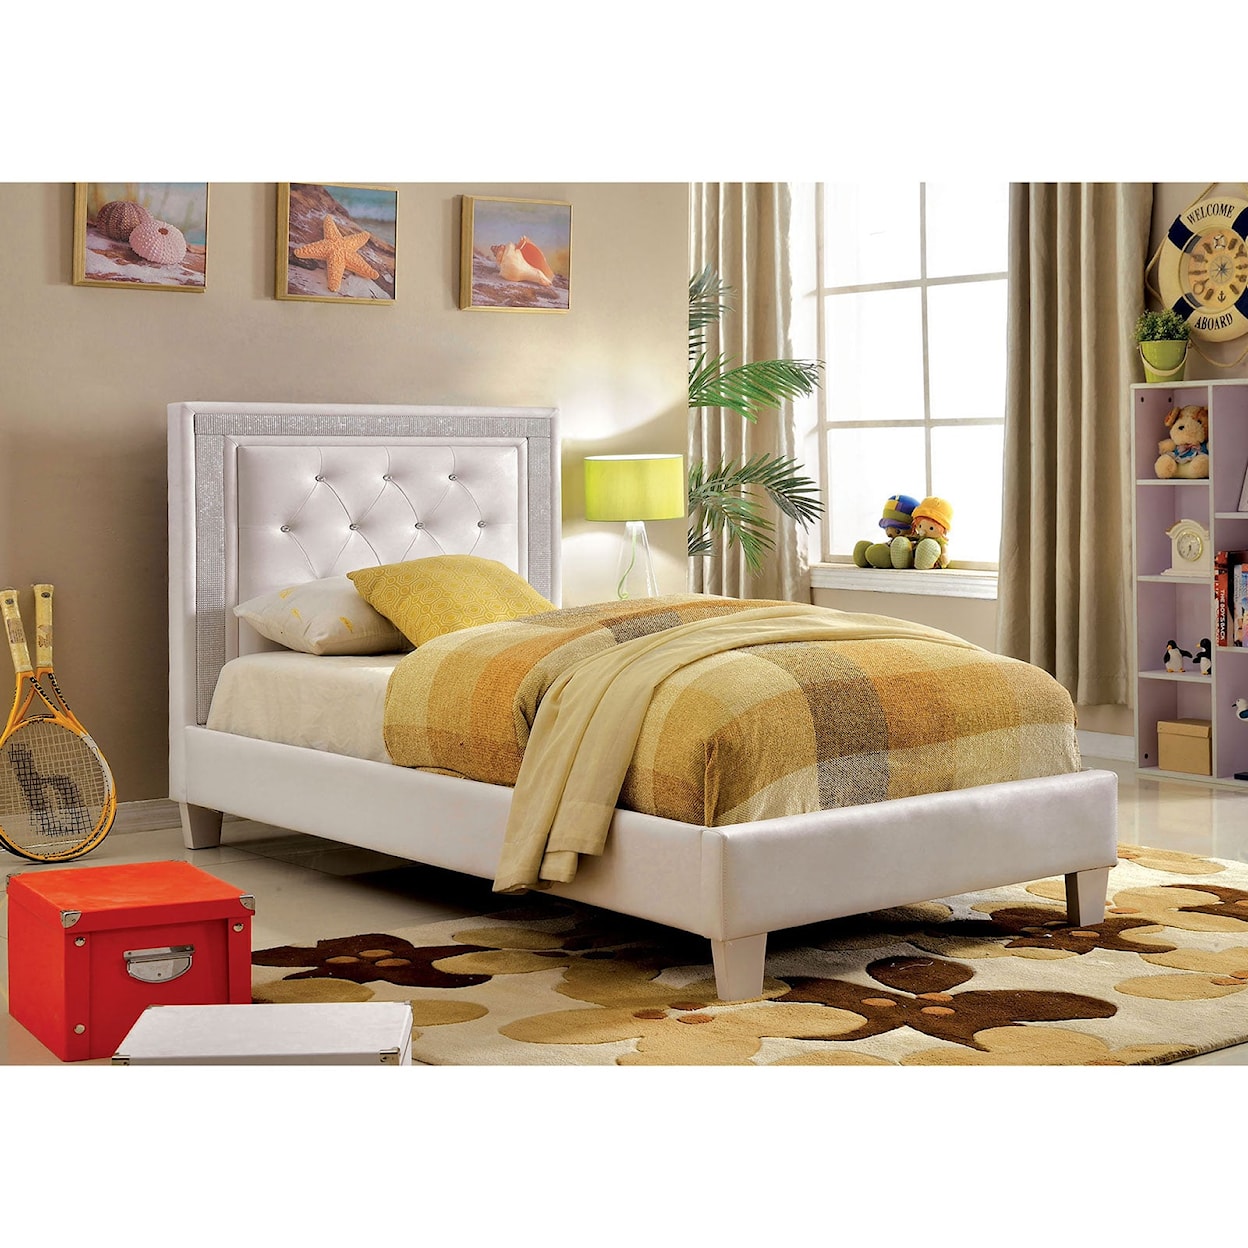 Furniture of America Lianne Twin Bed